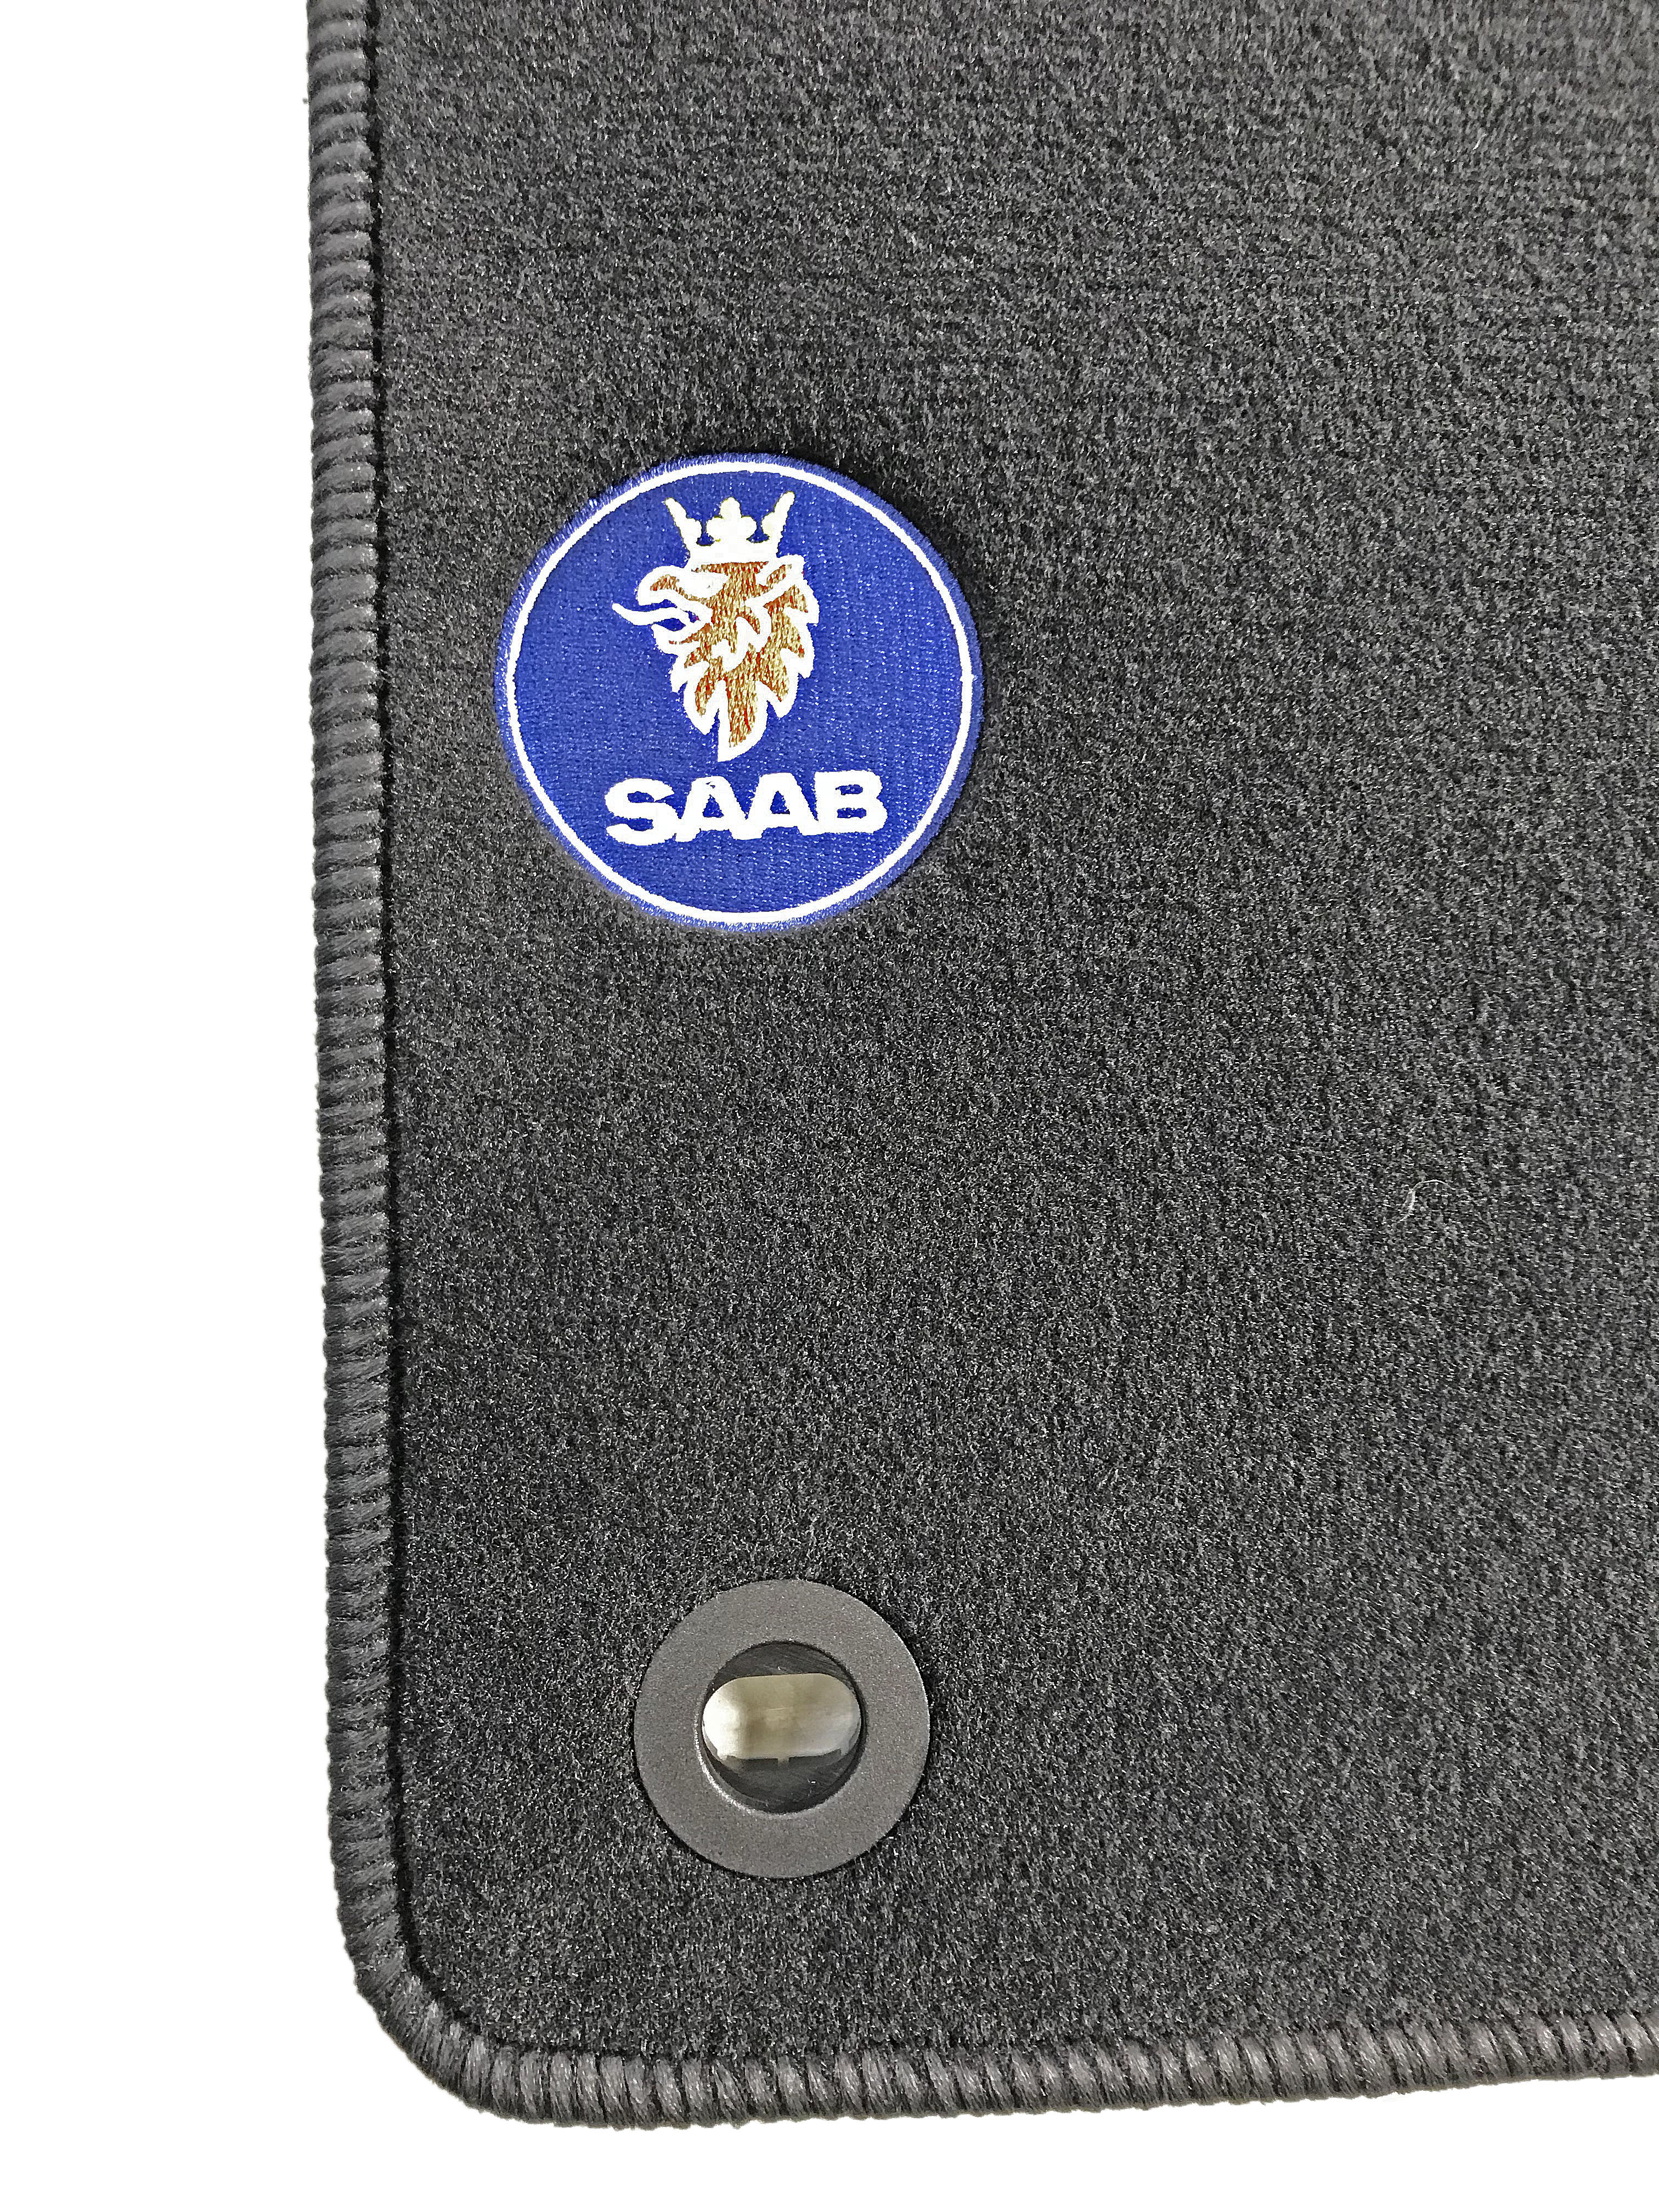 Saab 900 Classic automat met logo '87 - '93 (mattenset van 4 stuks)